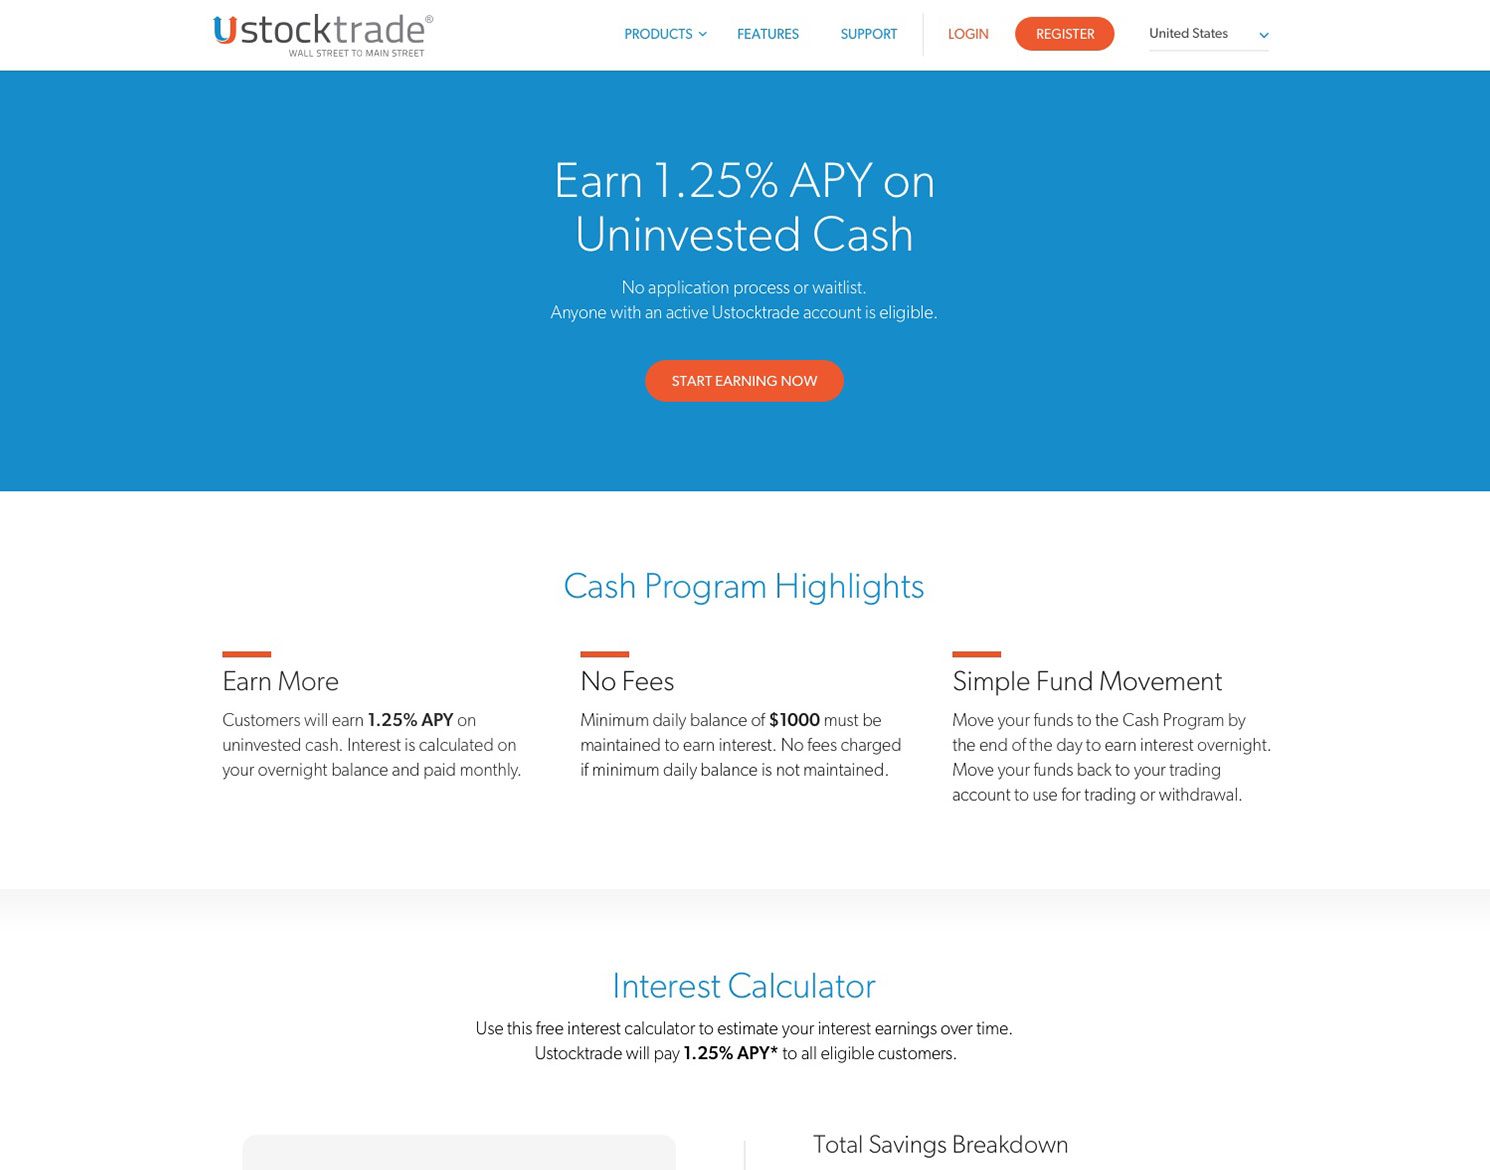 UST US Website - Cash Program